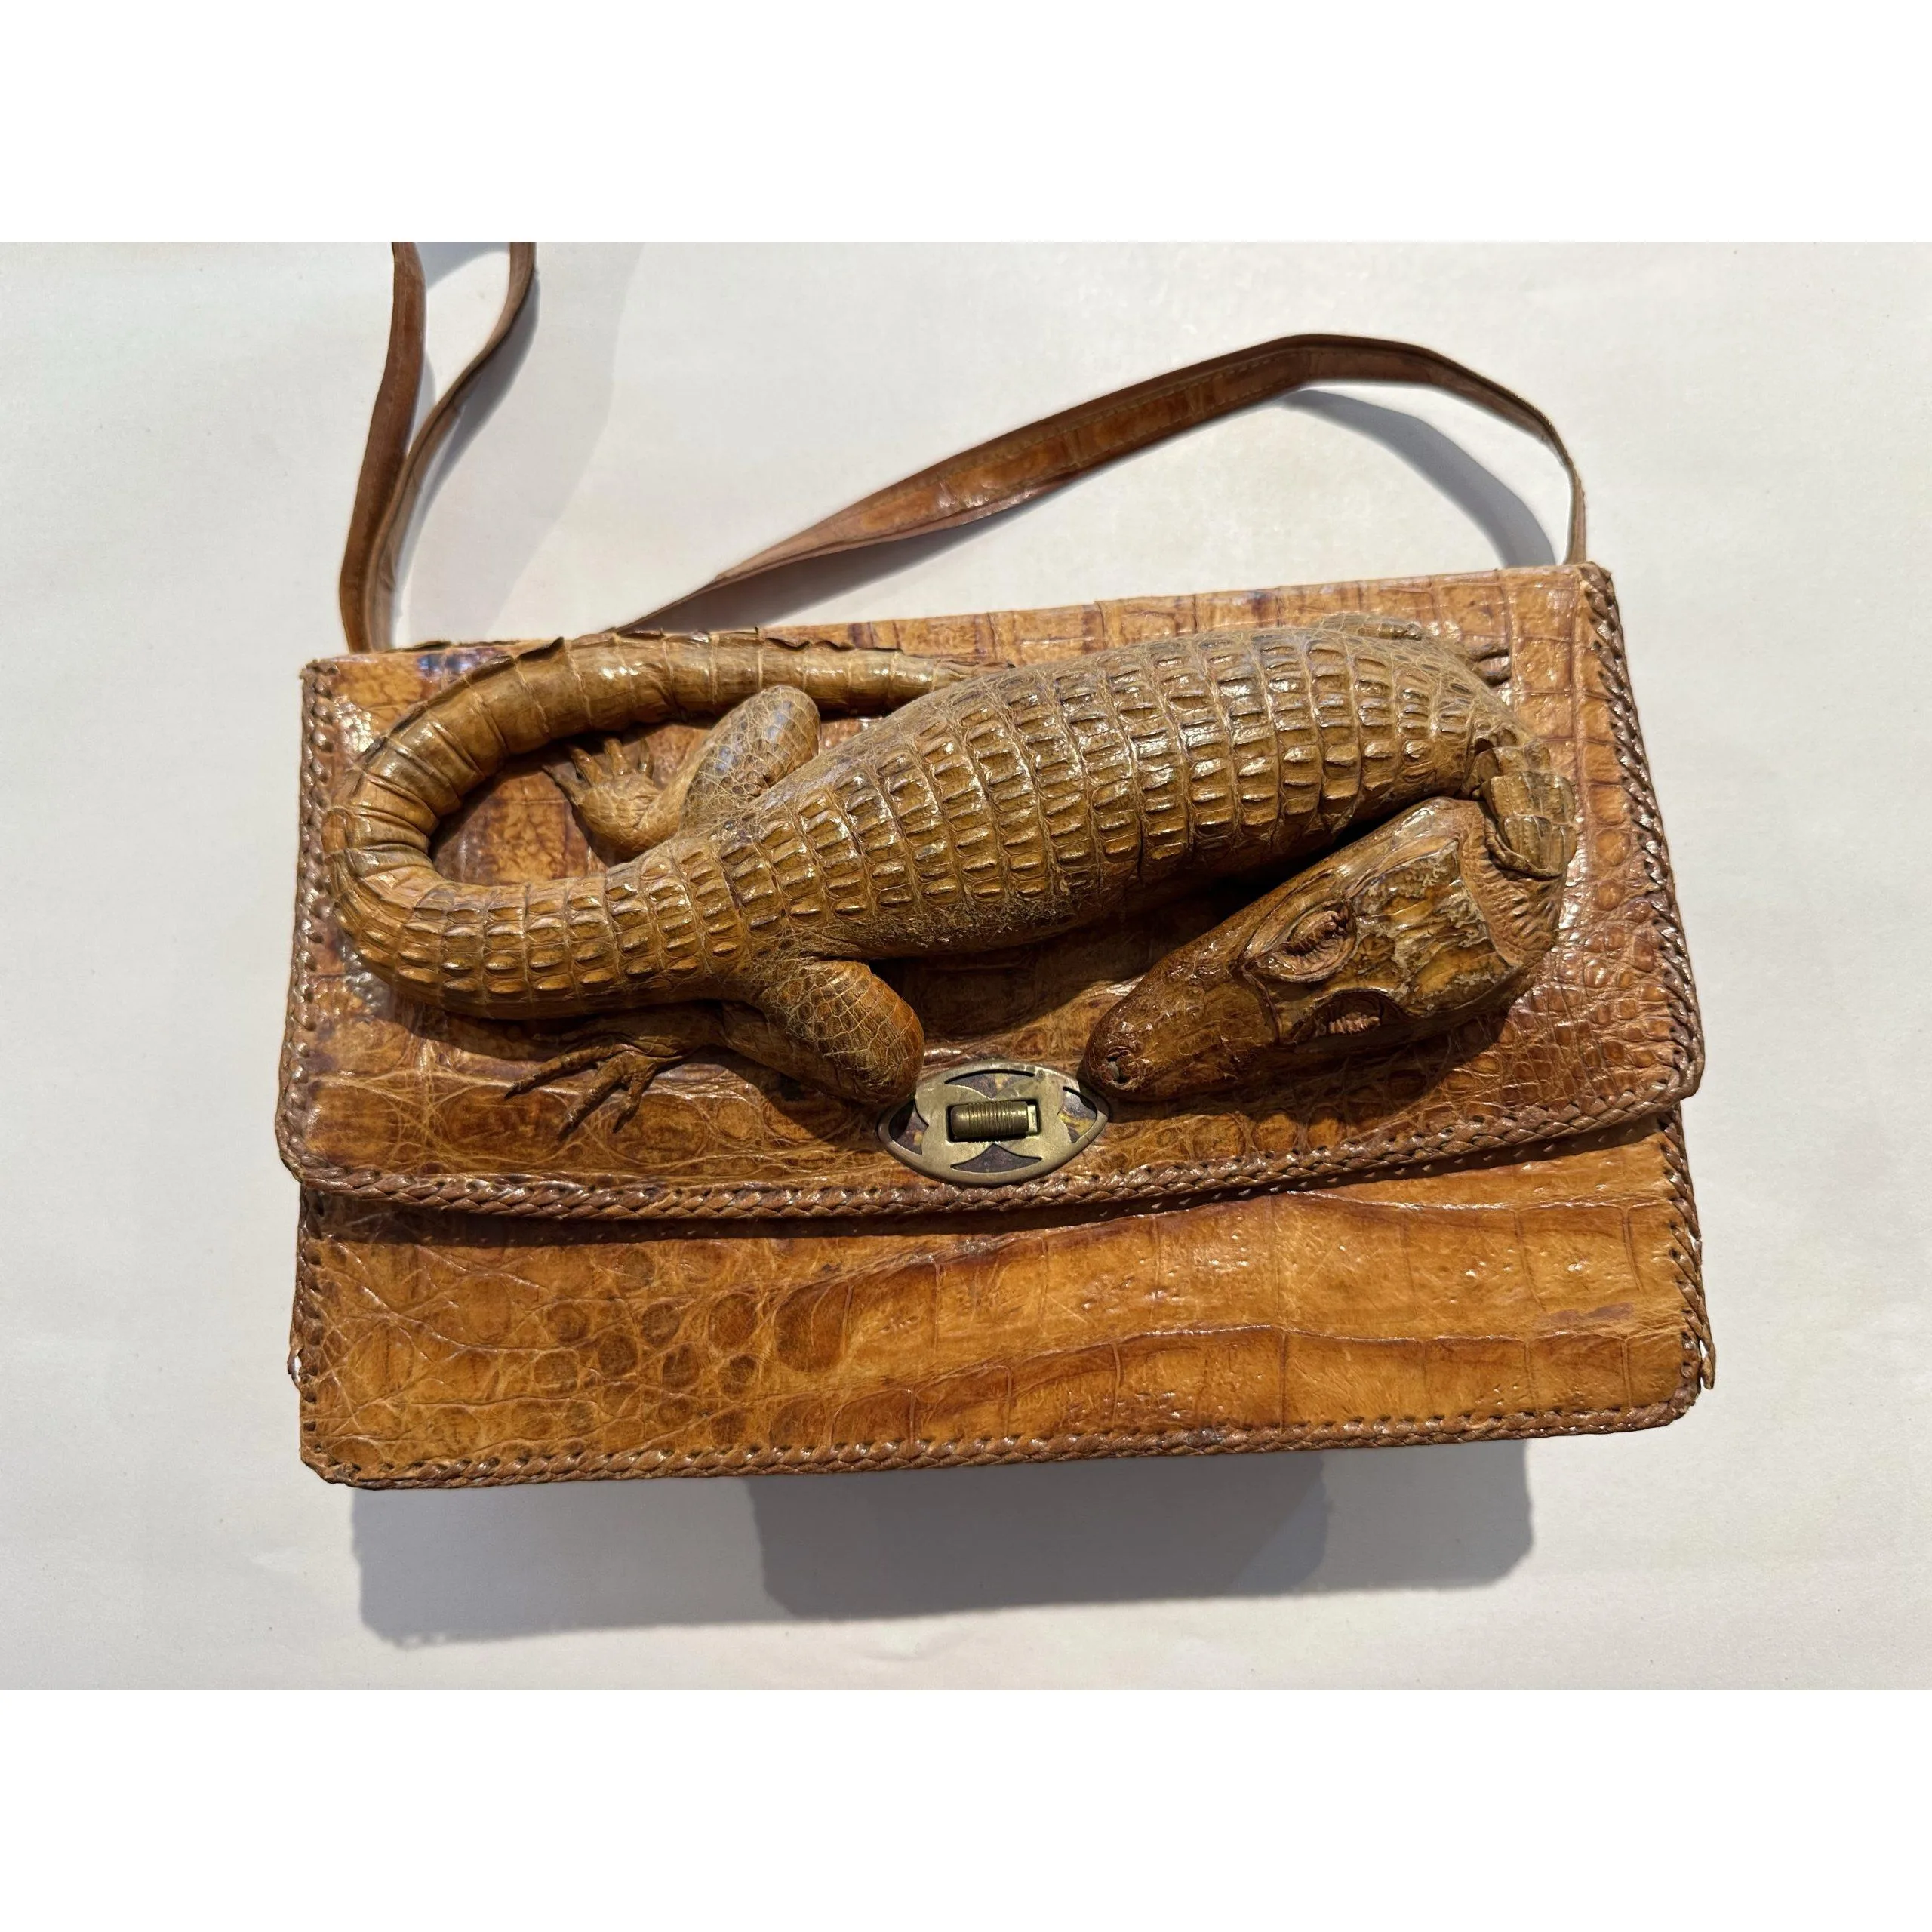 Vintage baby alligator purse - Gem